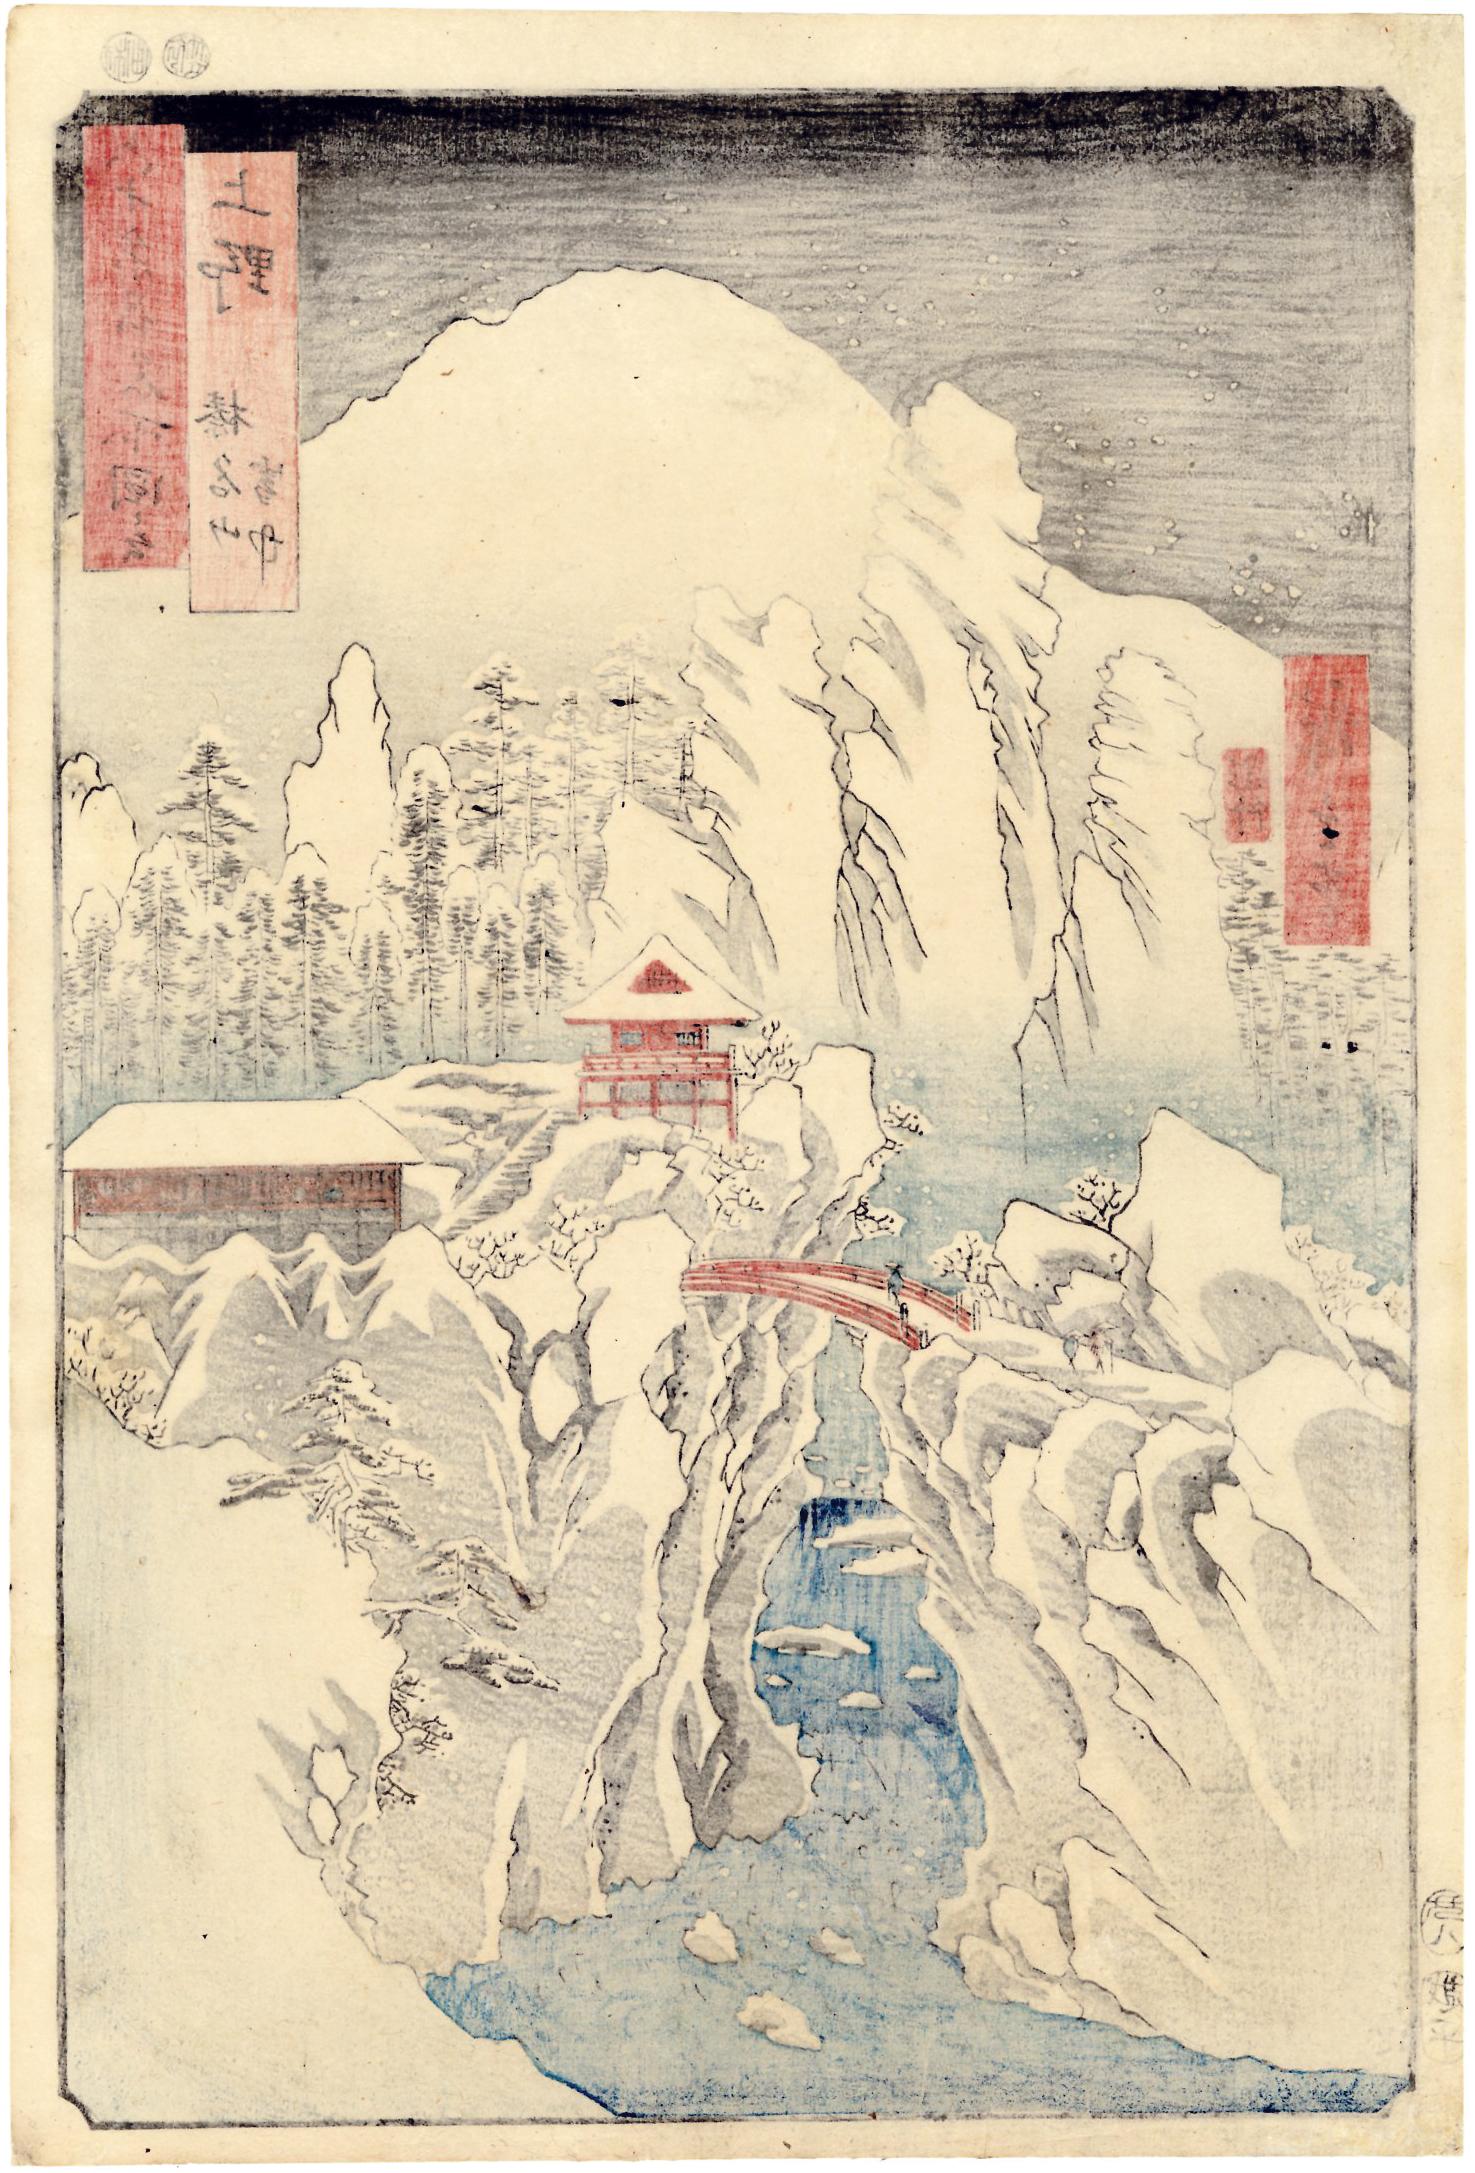 Kozuke Province, Mount Haruna Under Snow - Edo Print by Utagawa Hiroshige (Ando Hiroshige)